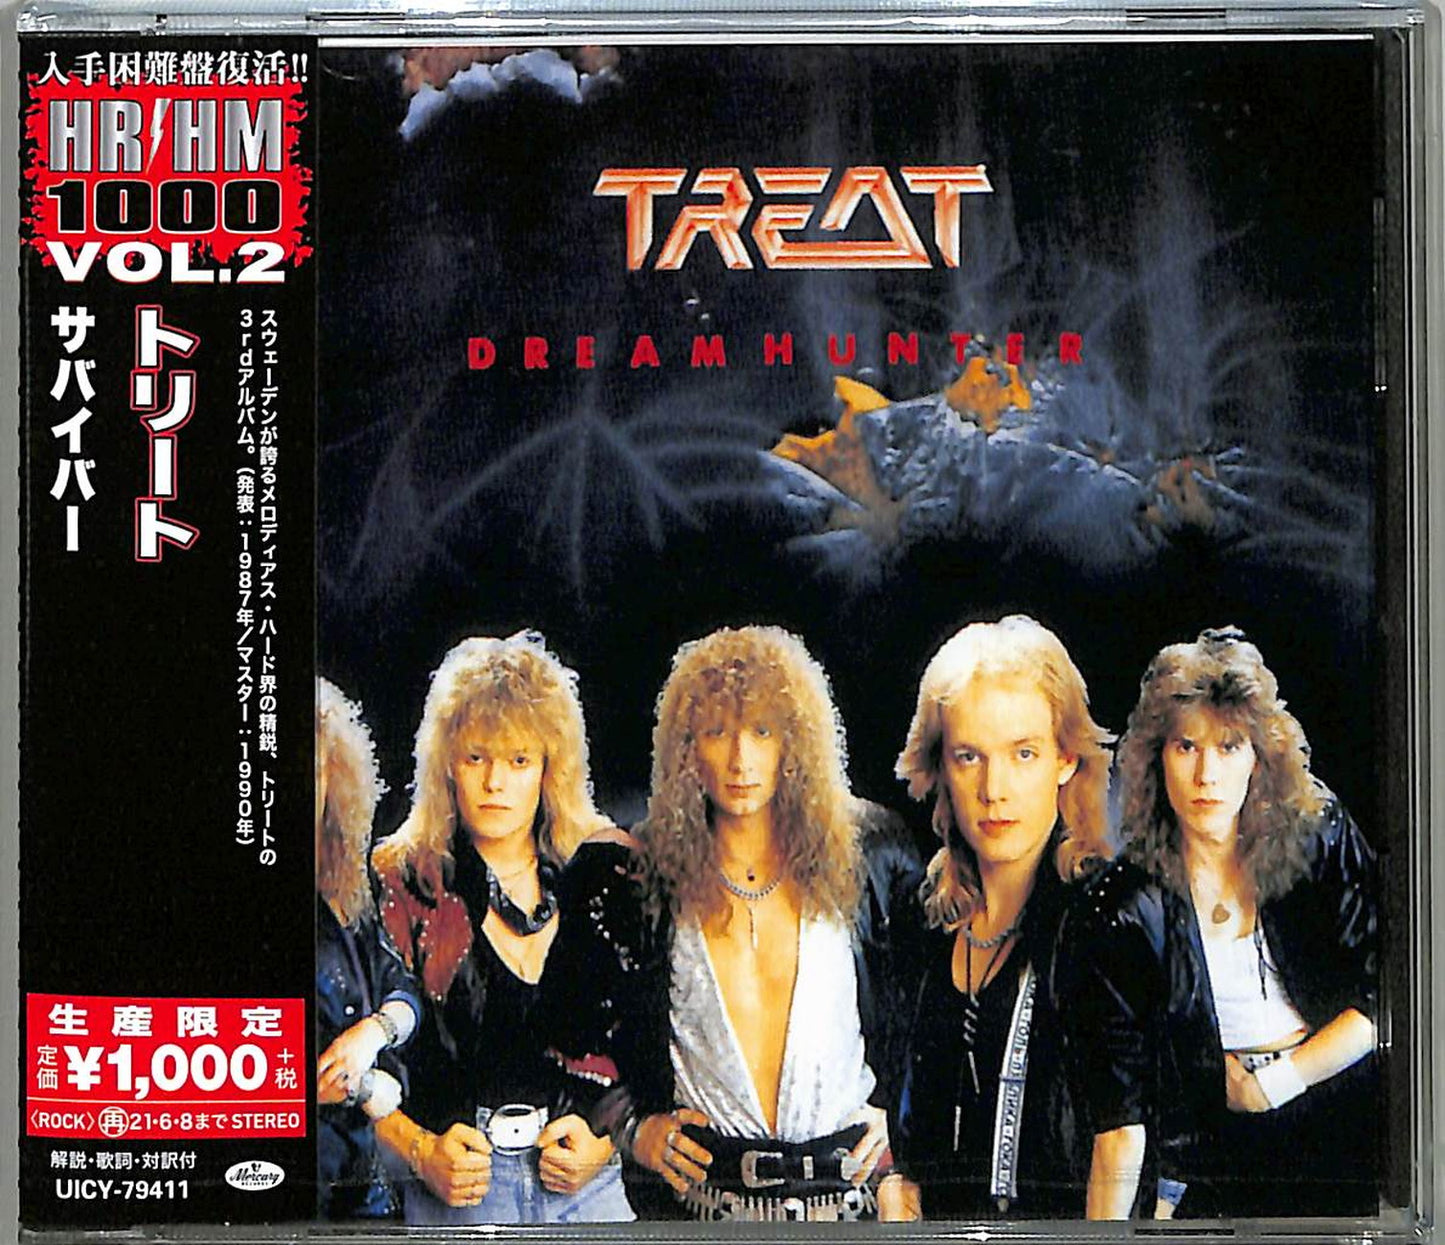 Treat - Dreamhunter - Japan  CD Limited Edition